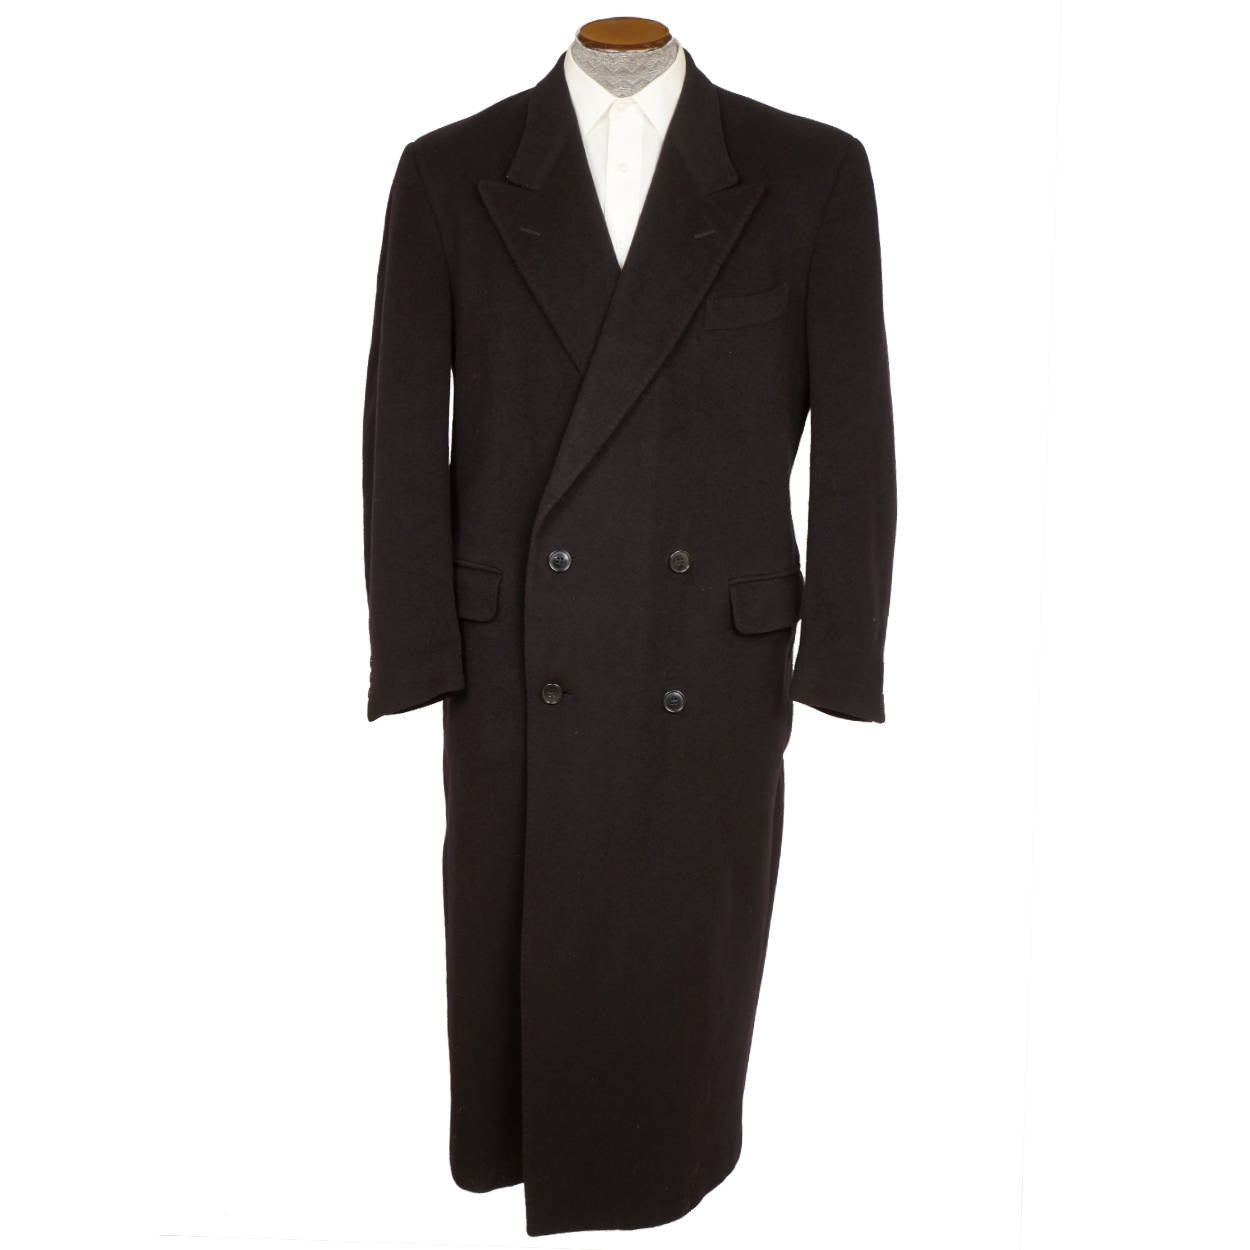 Vintage Giorgio Armani Coat 1980s White Label Overcoat Cashmere Wool  Topcoat L